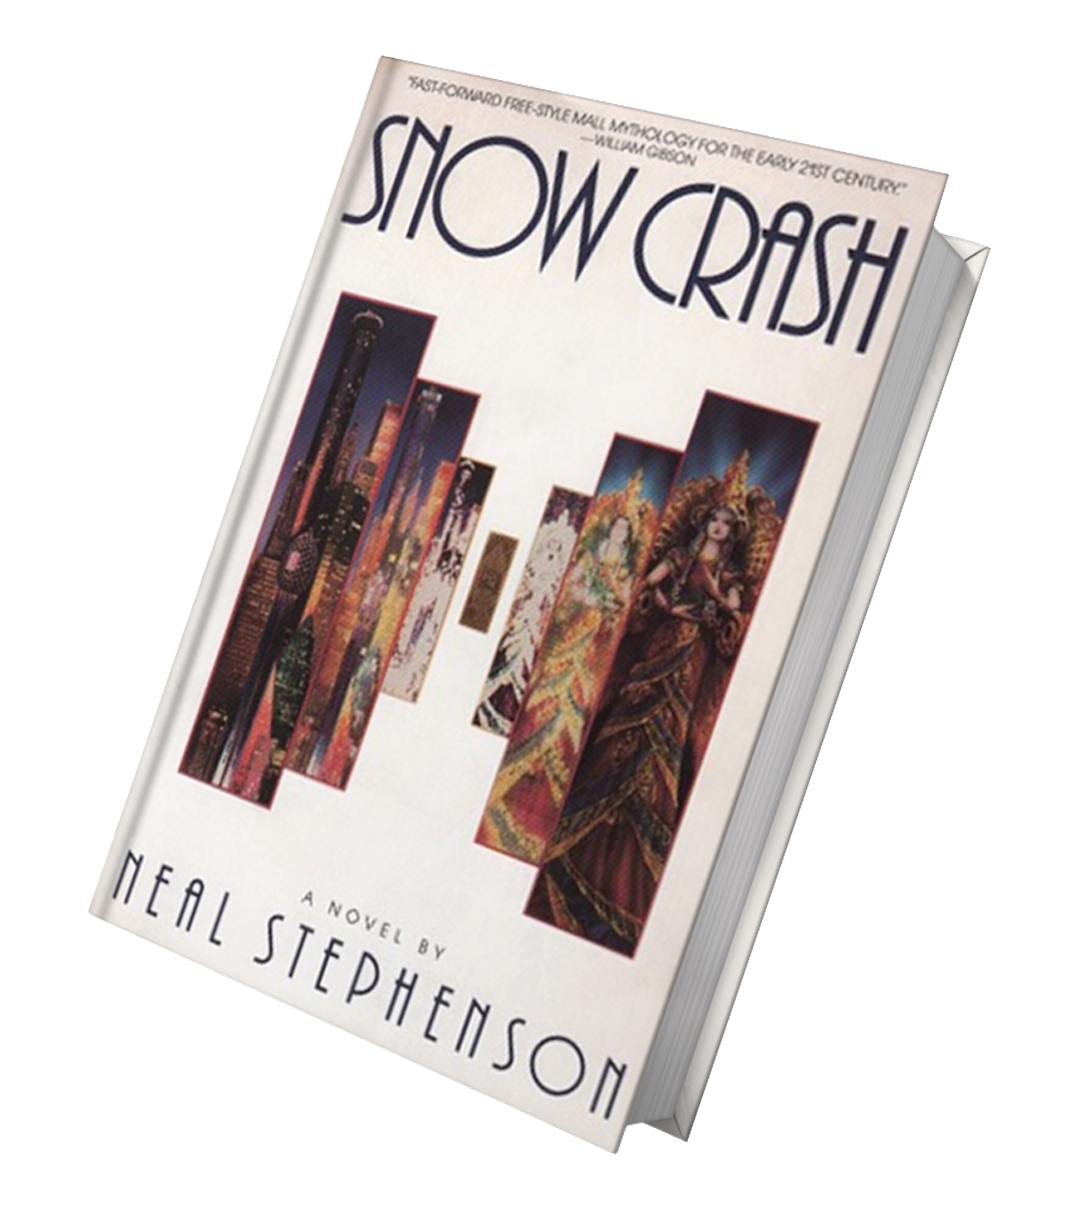 cover of Snow Crash book